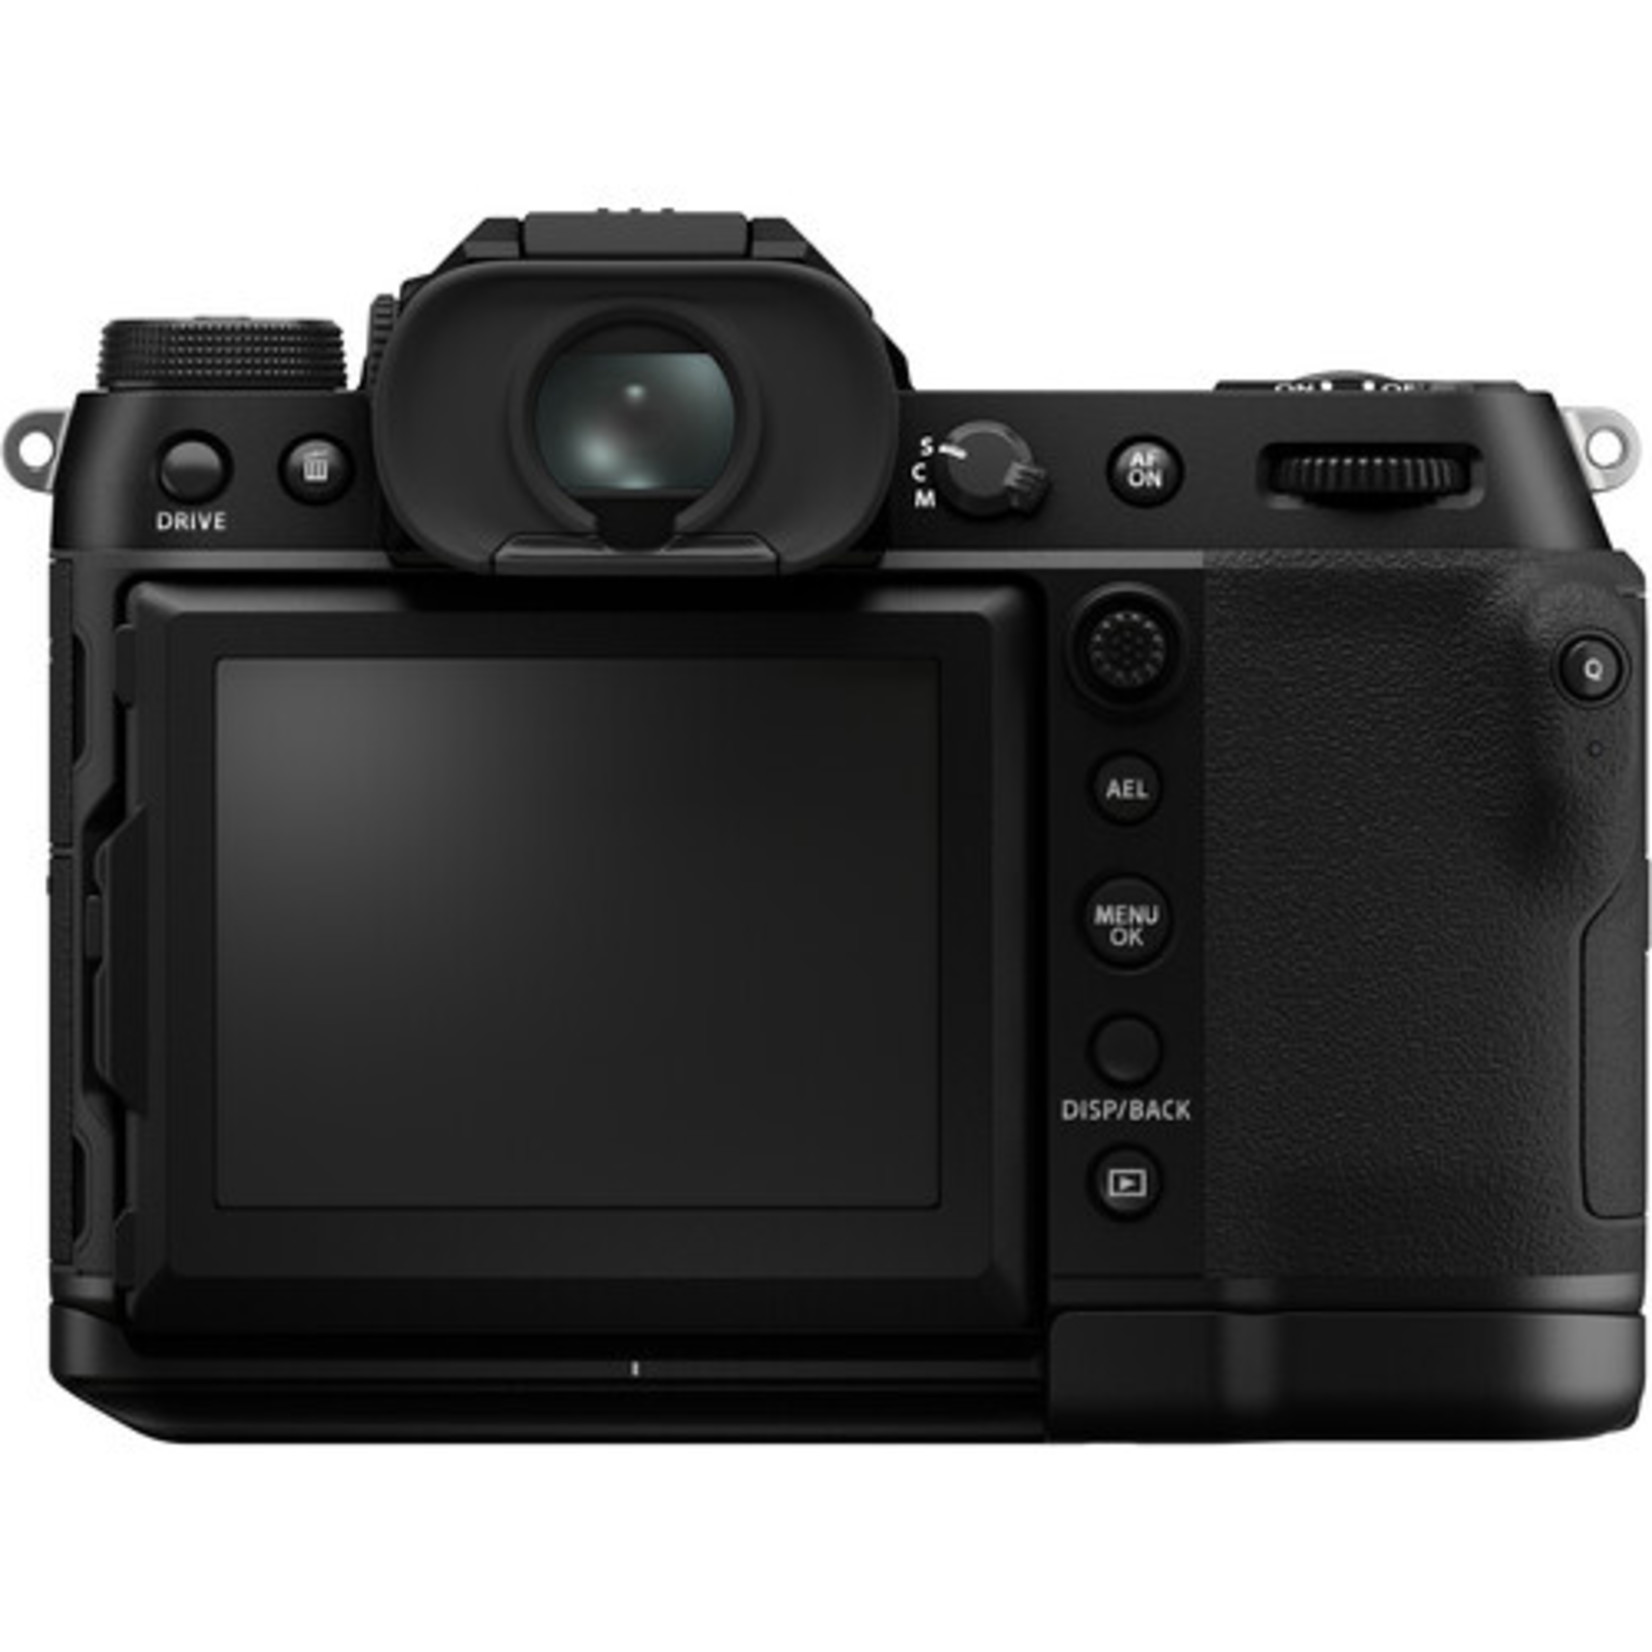 FujiFilm FUJIFILM GFX 50S II Medium Format Mirrorless Camera with 35-70mm Lens Kit